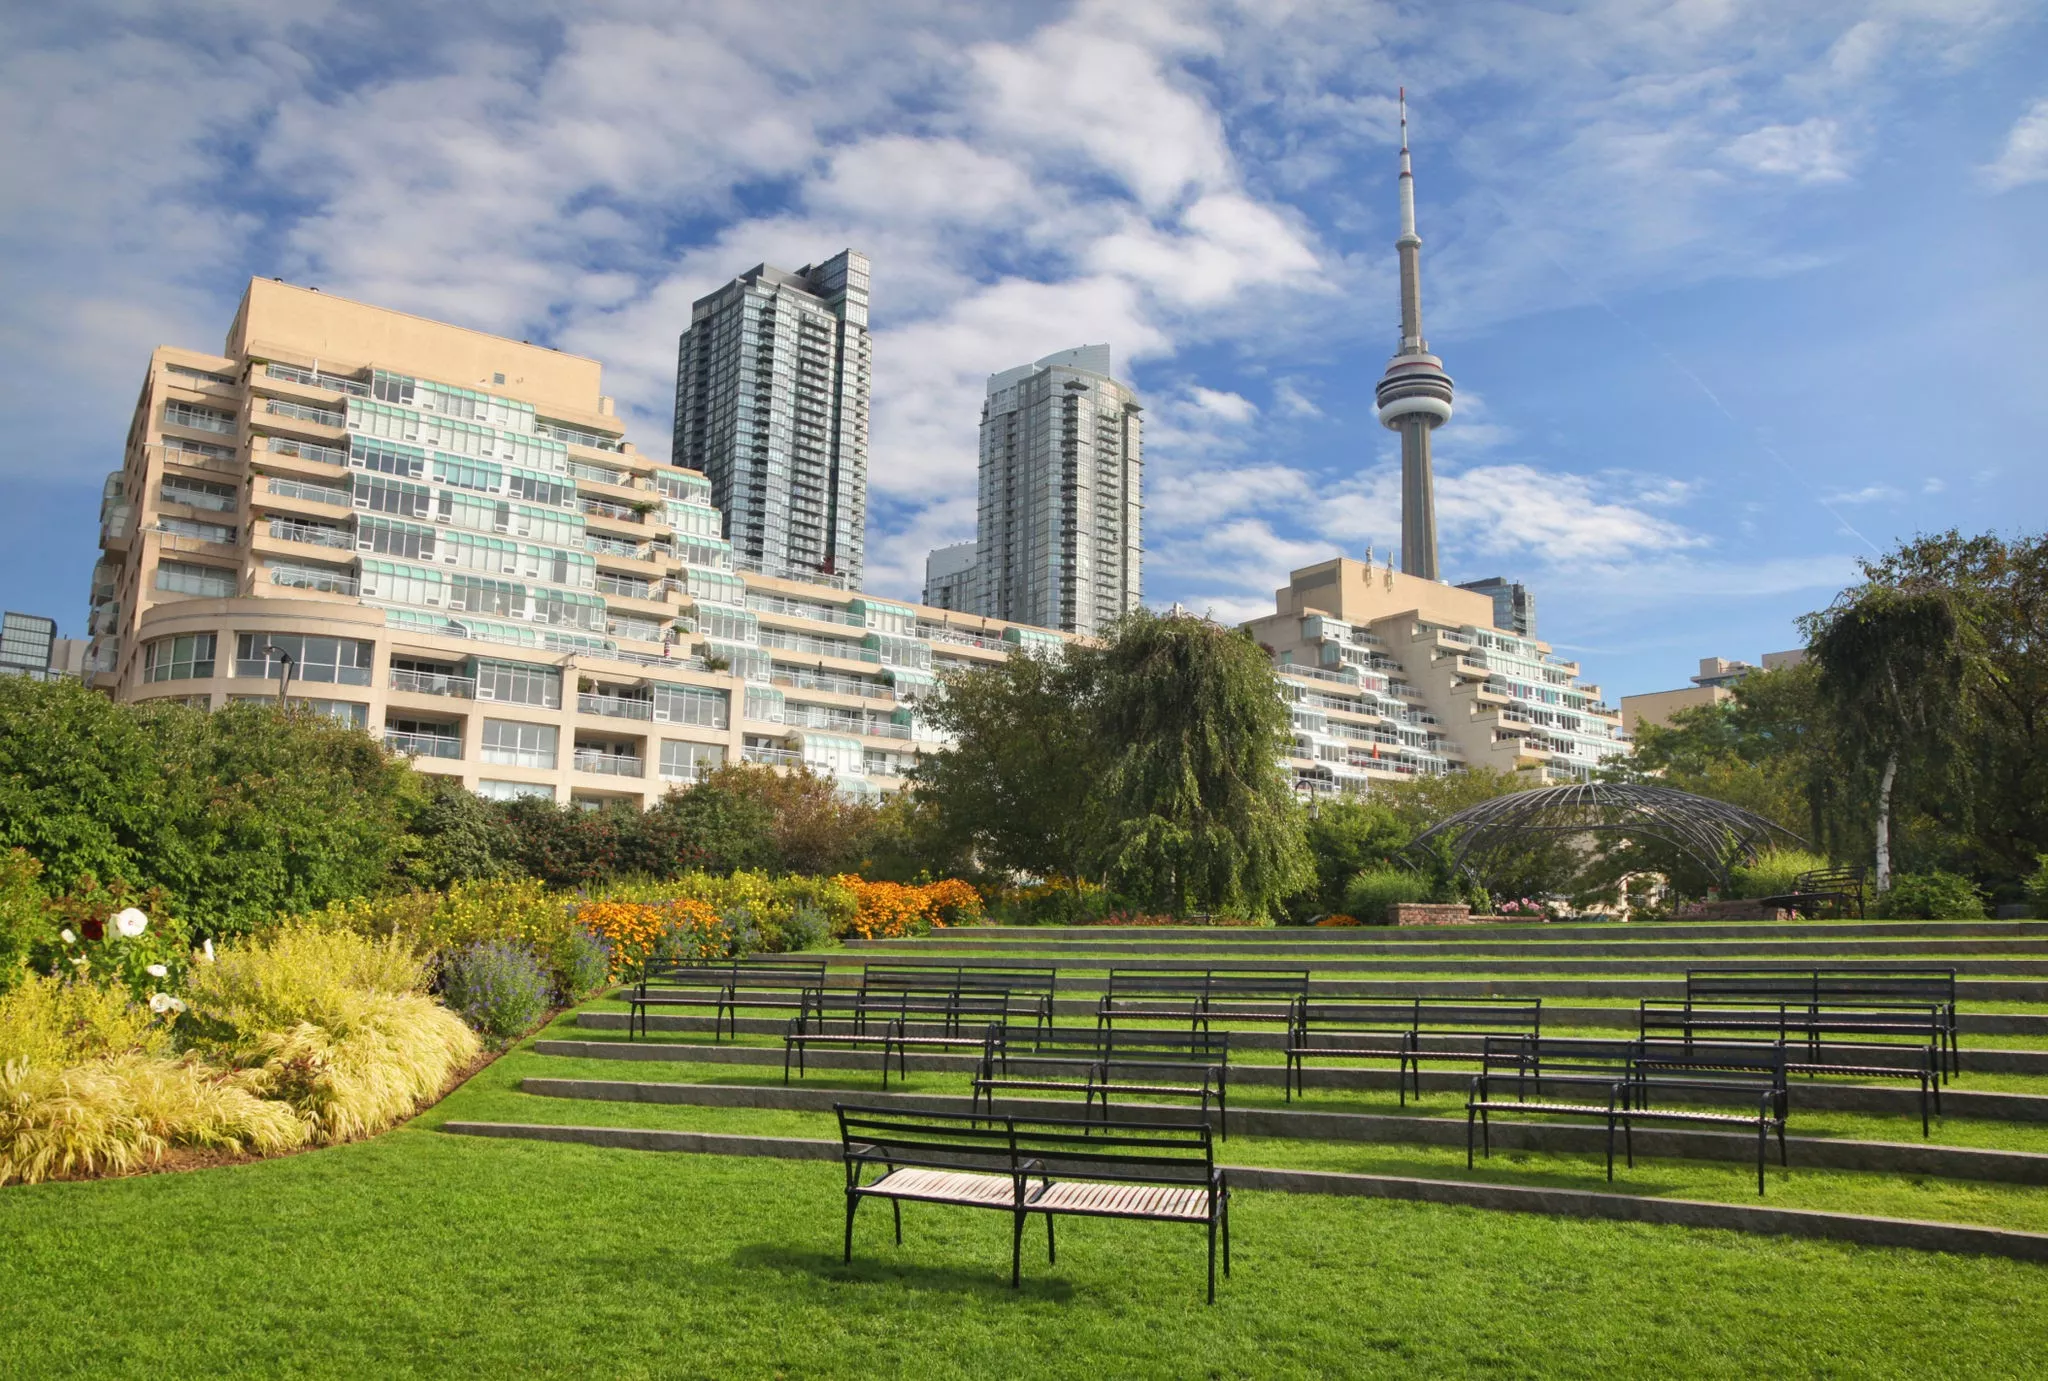 Toronto Music Garden in Canada, North America | Gardens - Rated 3.9